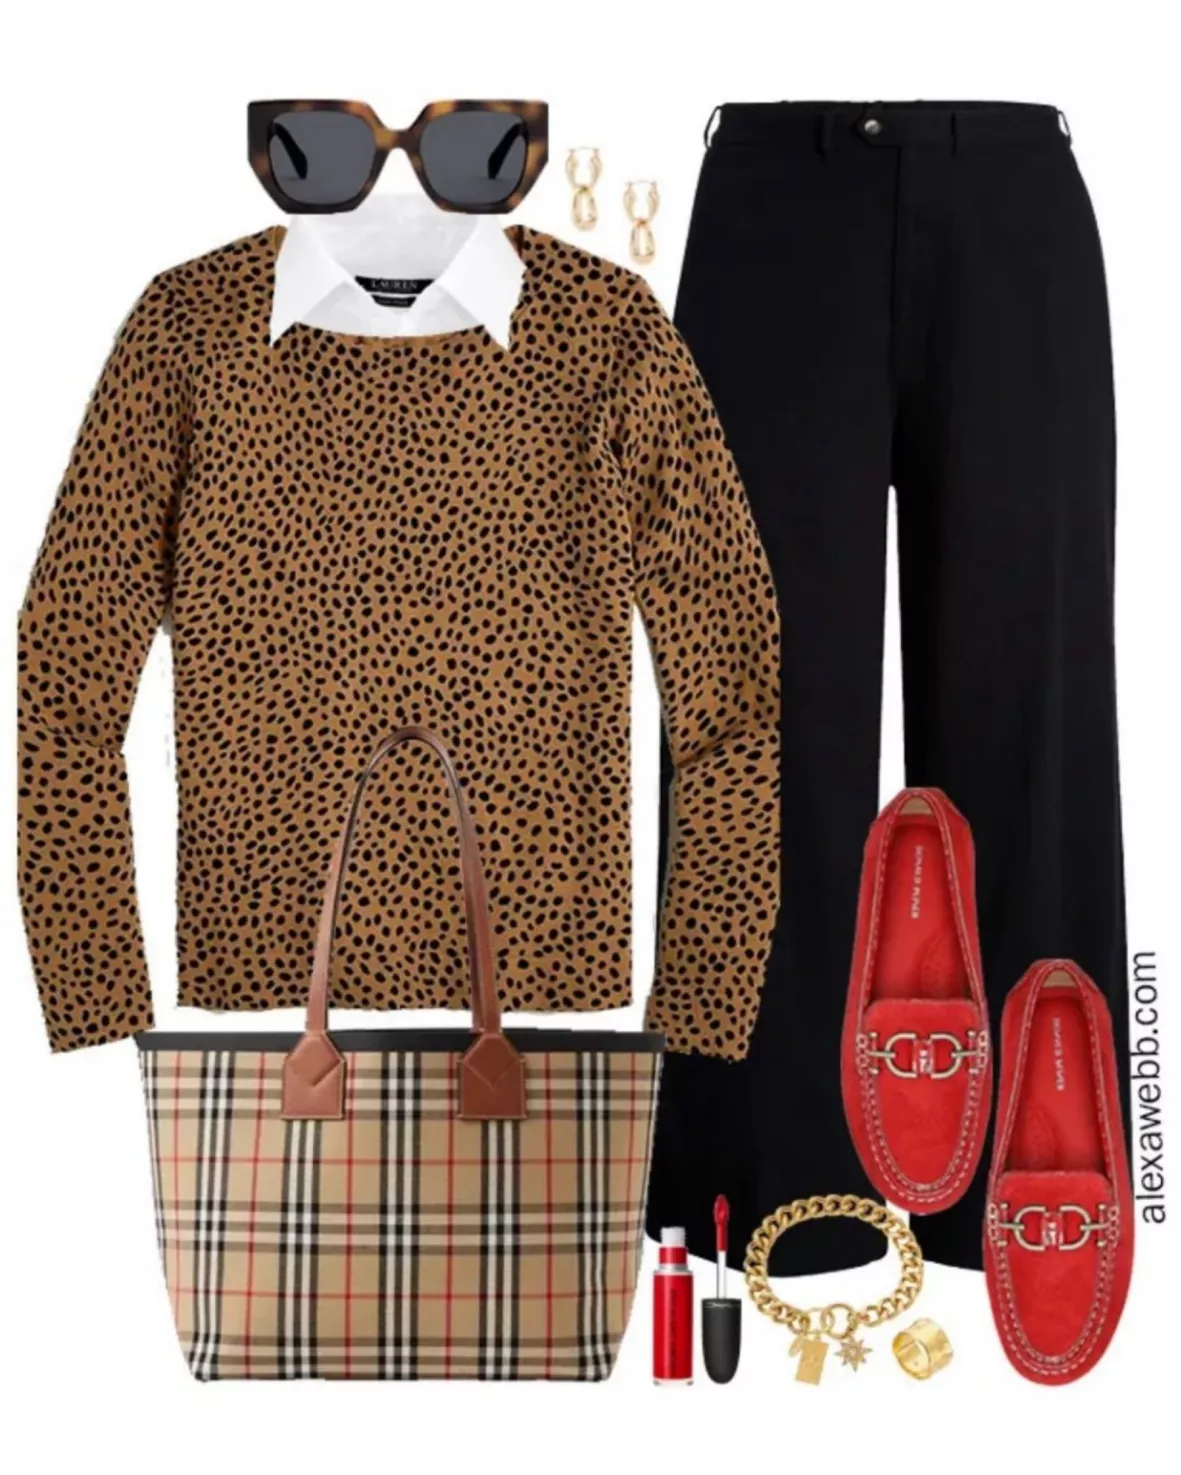 Plus Size Leopard Cardigan Outfit Ideas - Alexa Webb